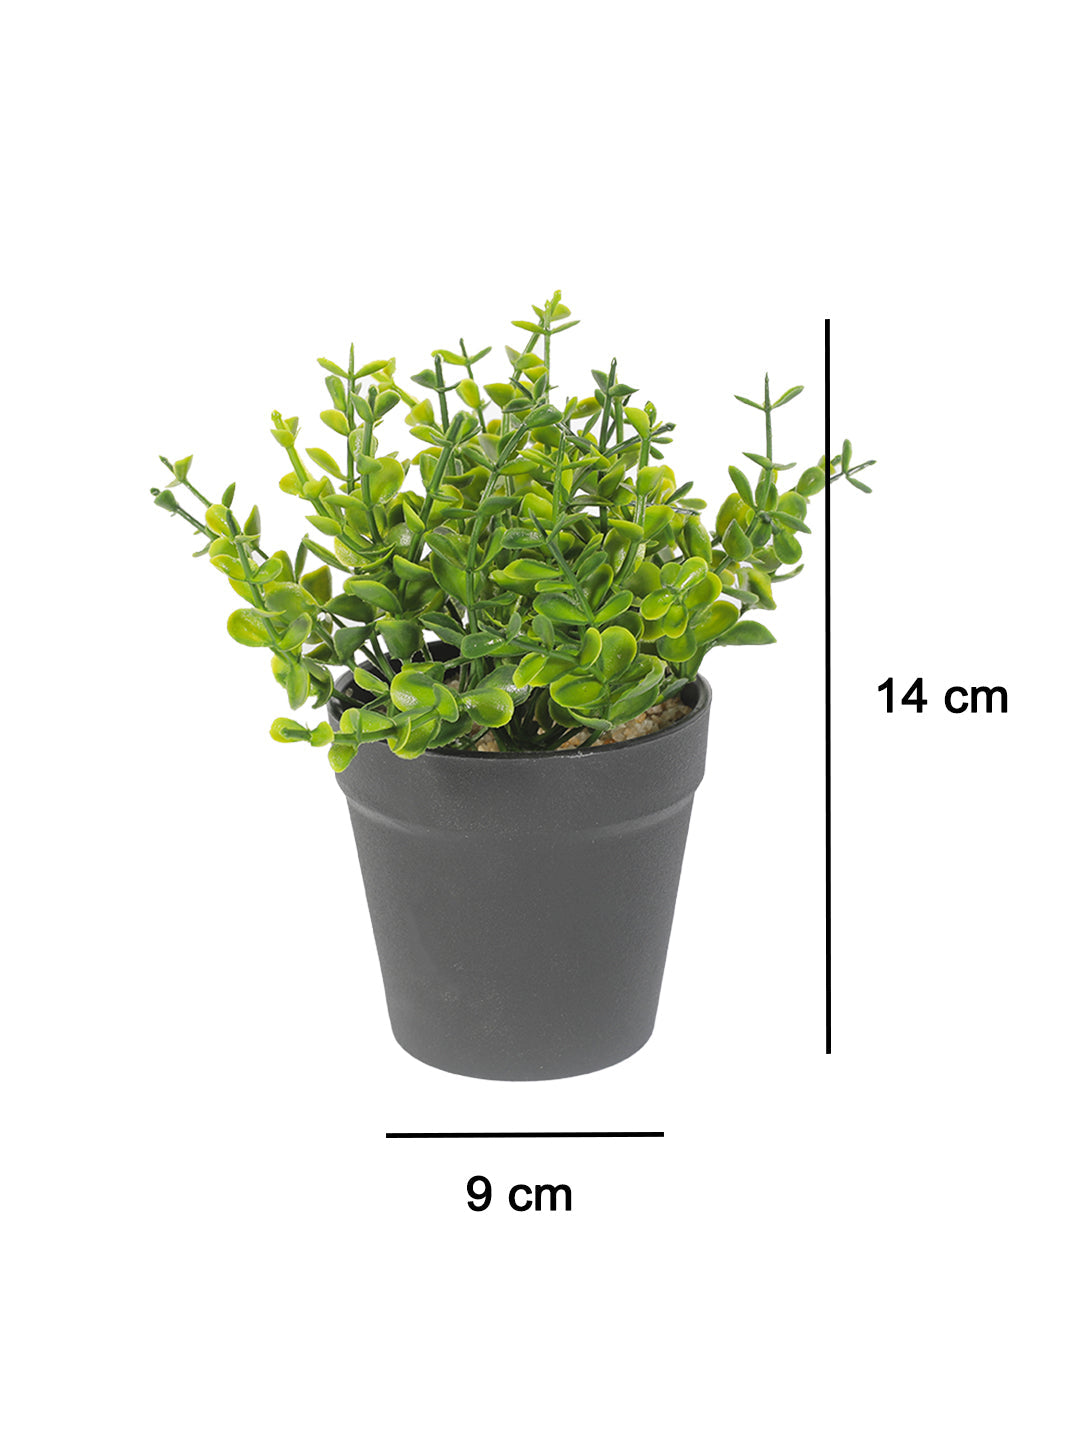 VON CASA Artificial Green Flower Potted Plant - Black Pot